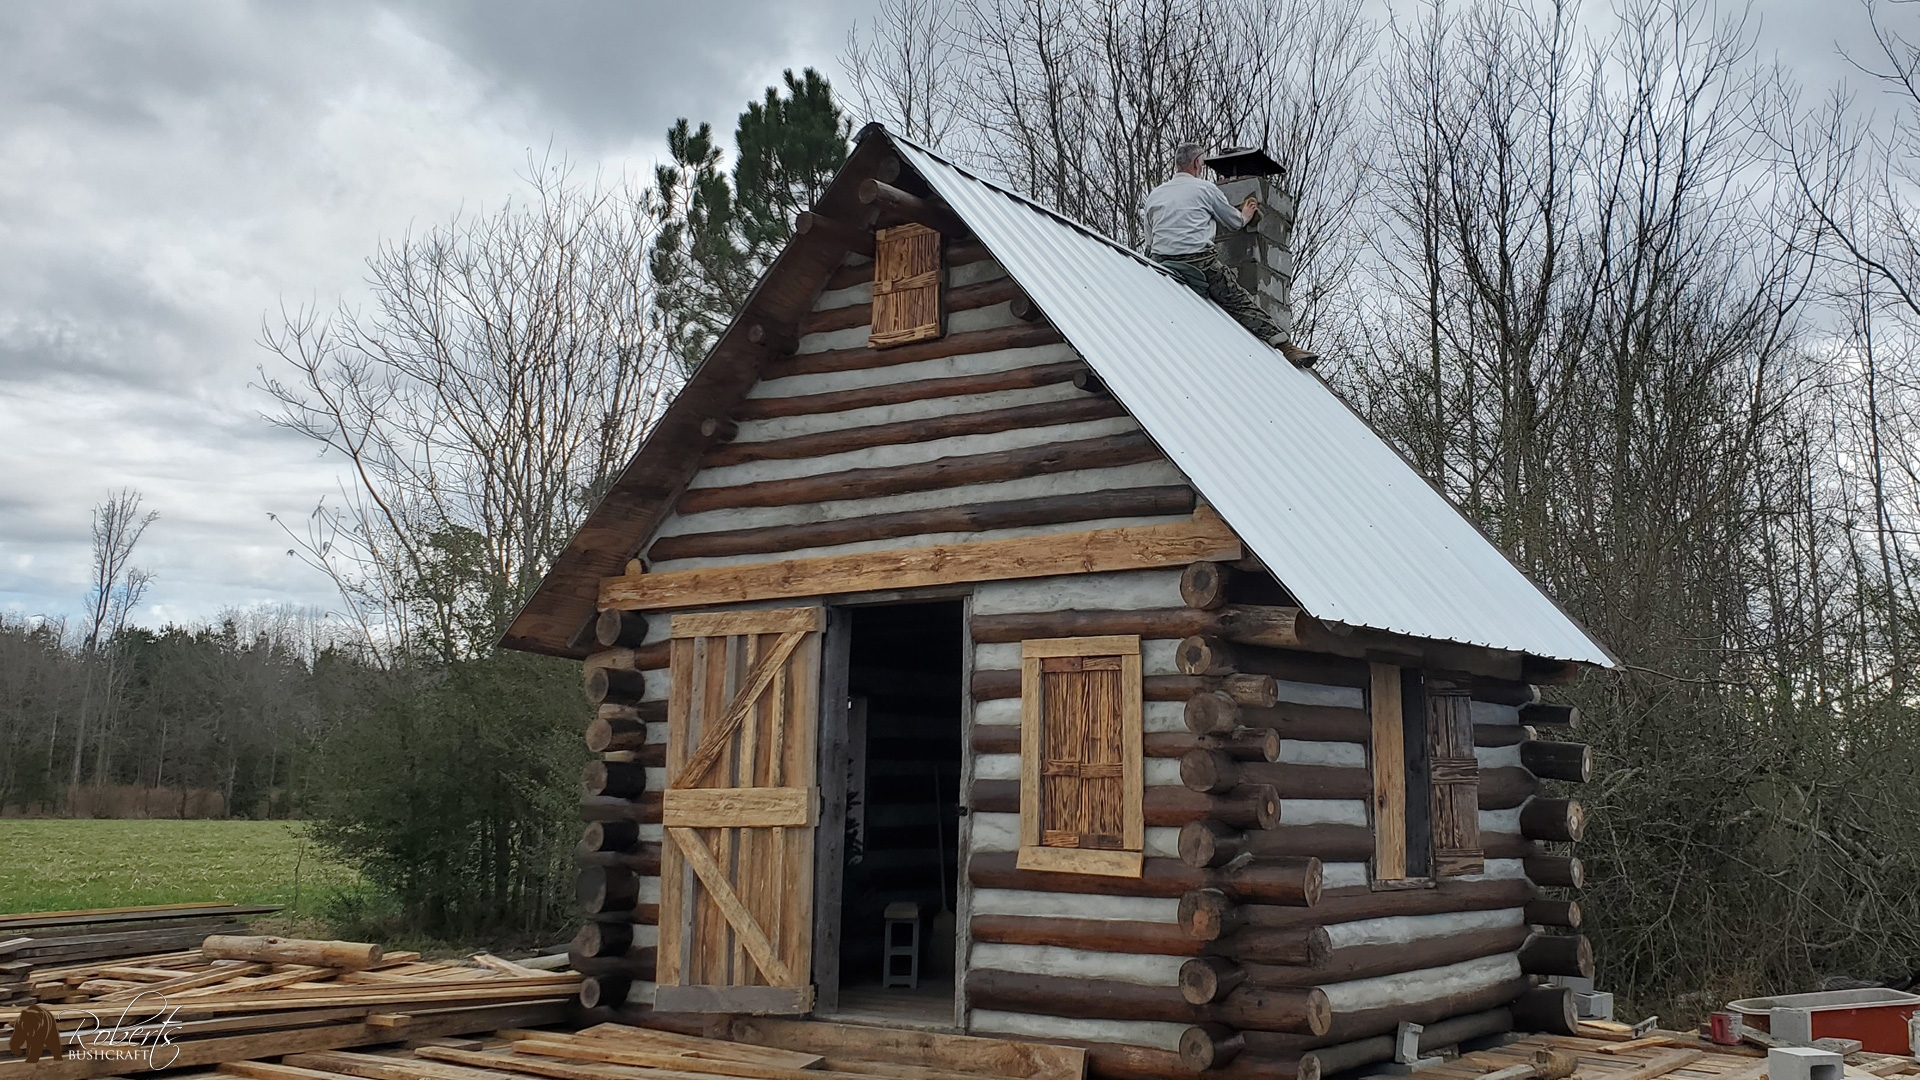 Finished chimney on off-grid cabin